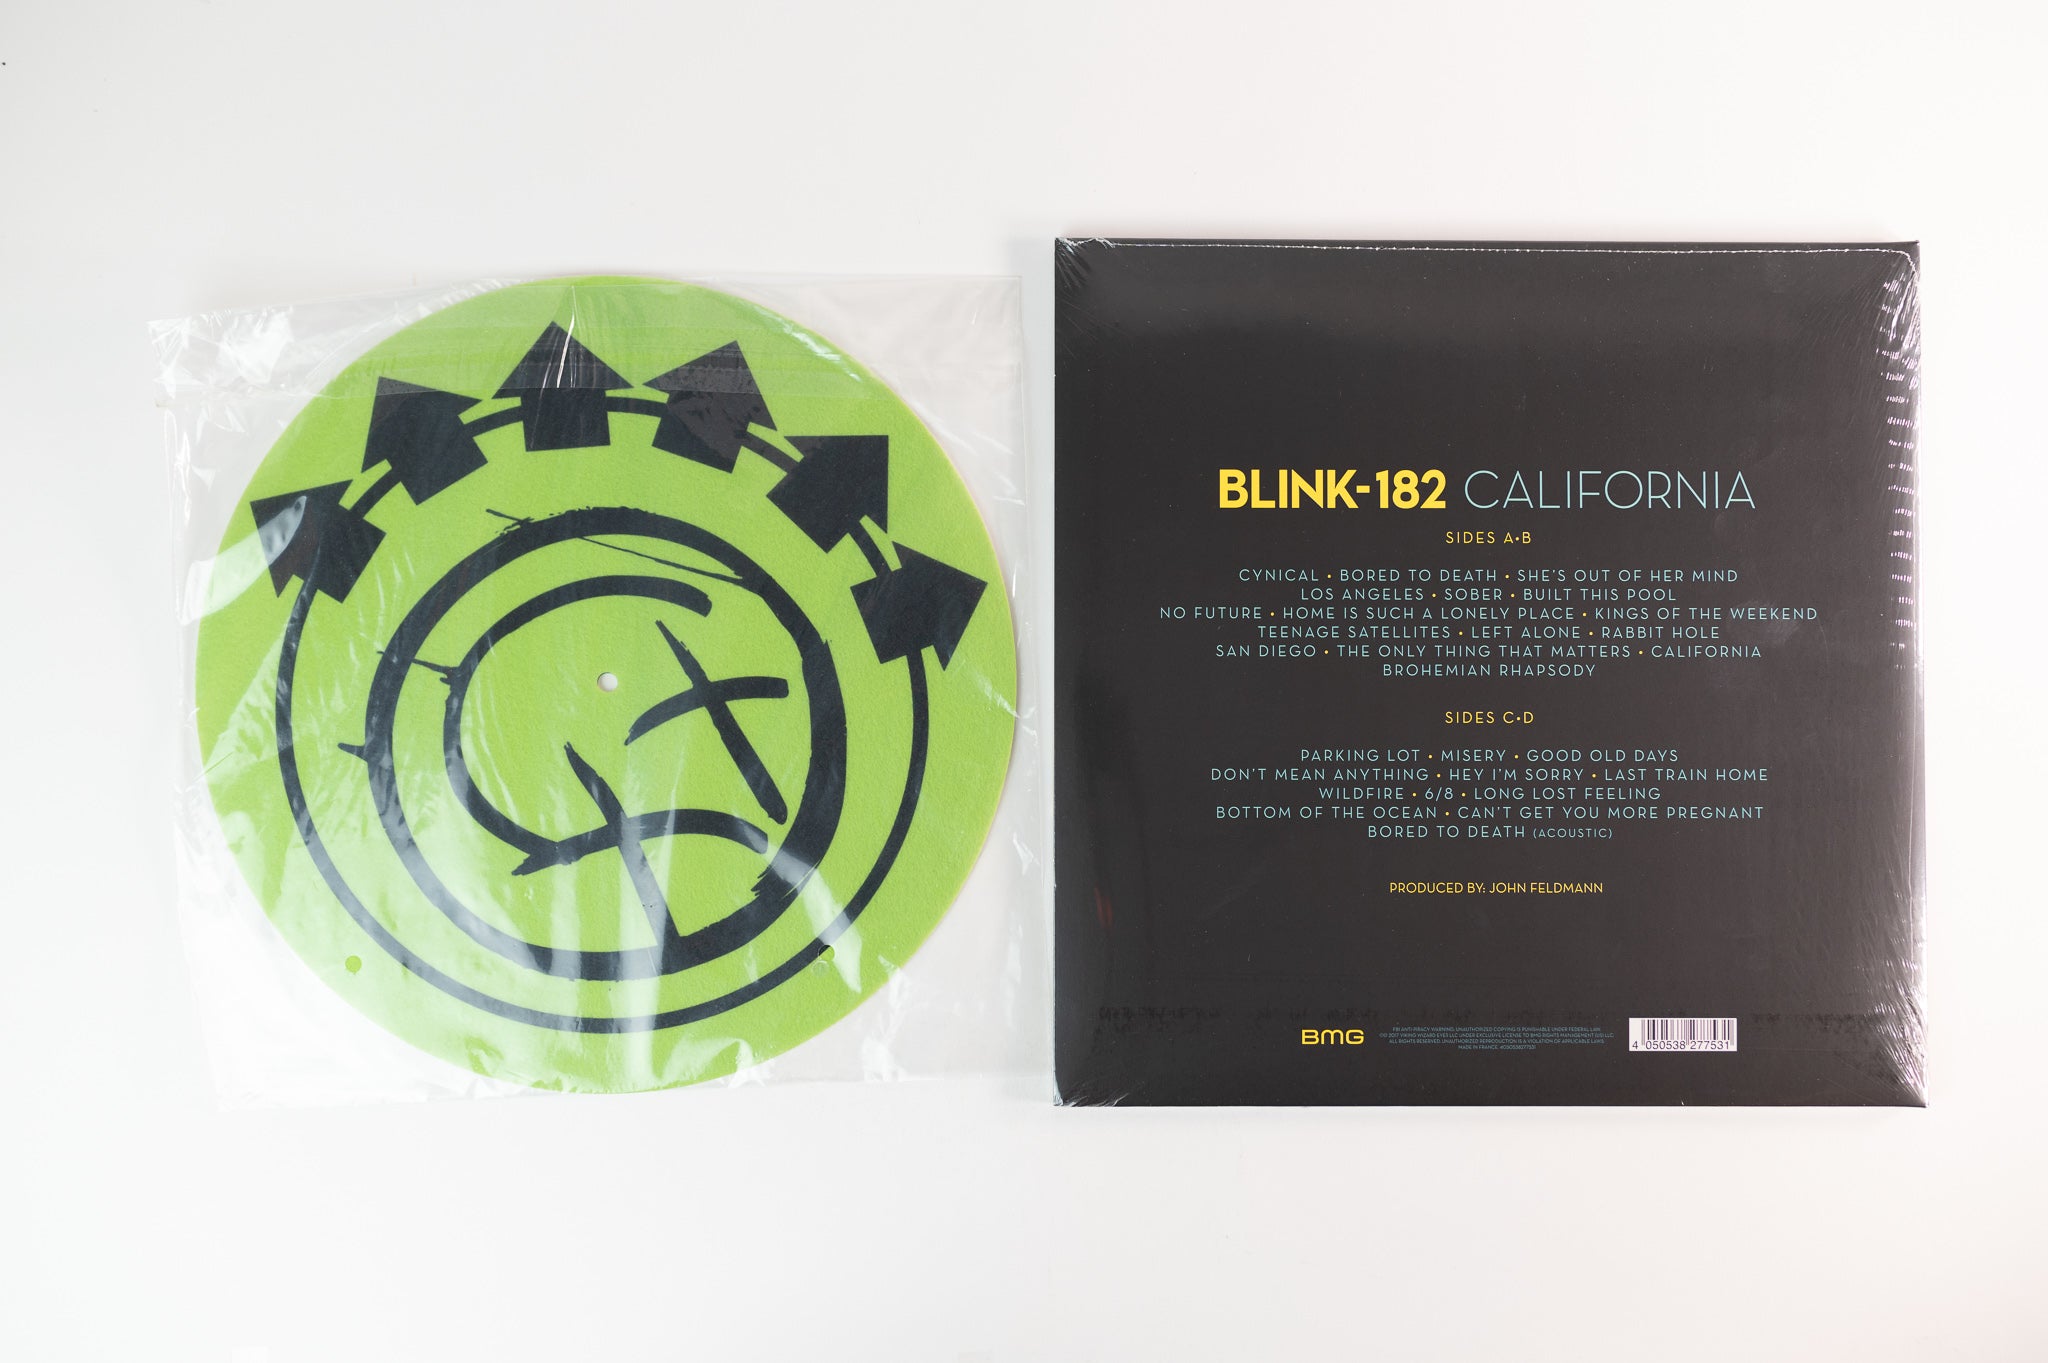 Blink-182 - California on BMG - Deluxe Edition Green Vinyl w/ slipmat